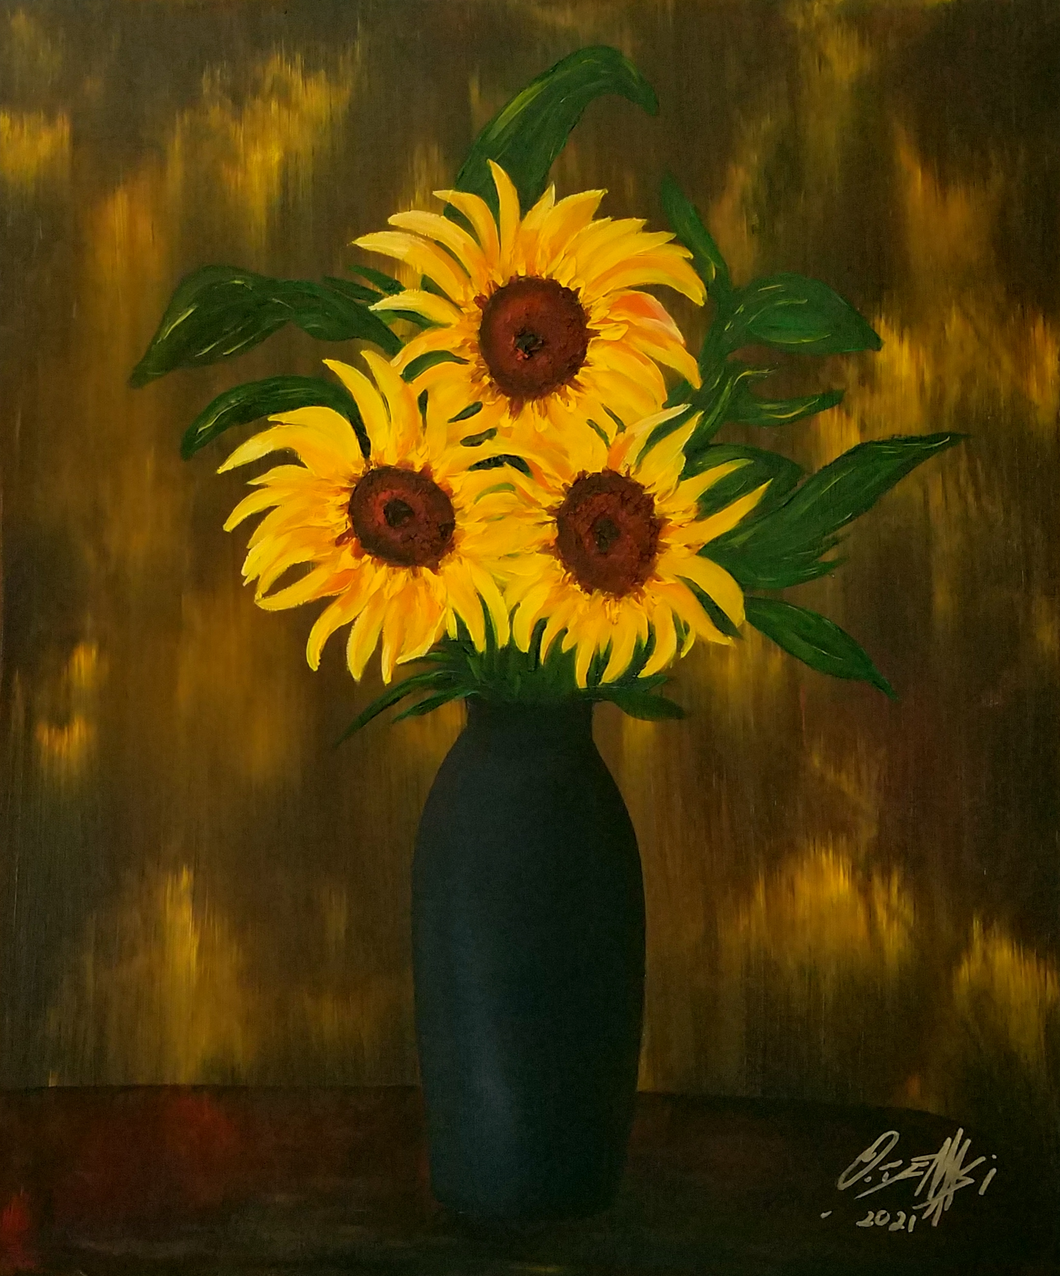 Black Vase - Sunflower Study 2